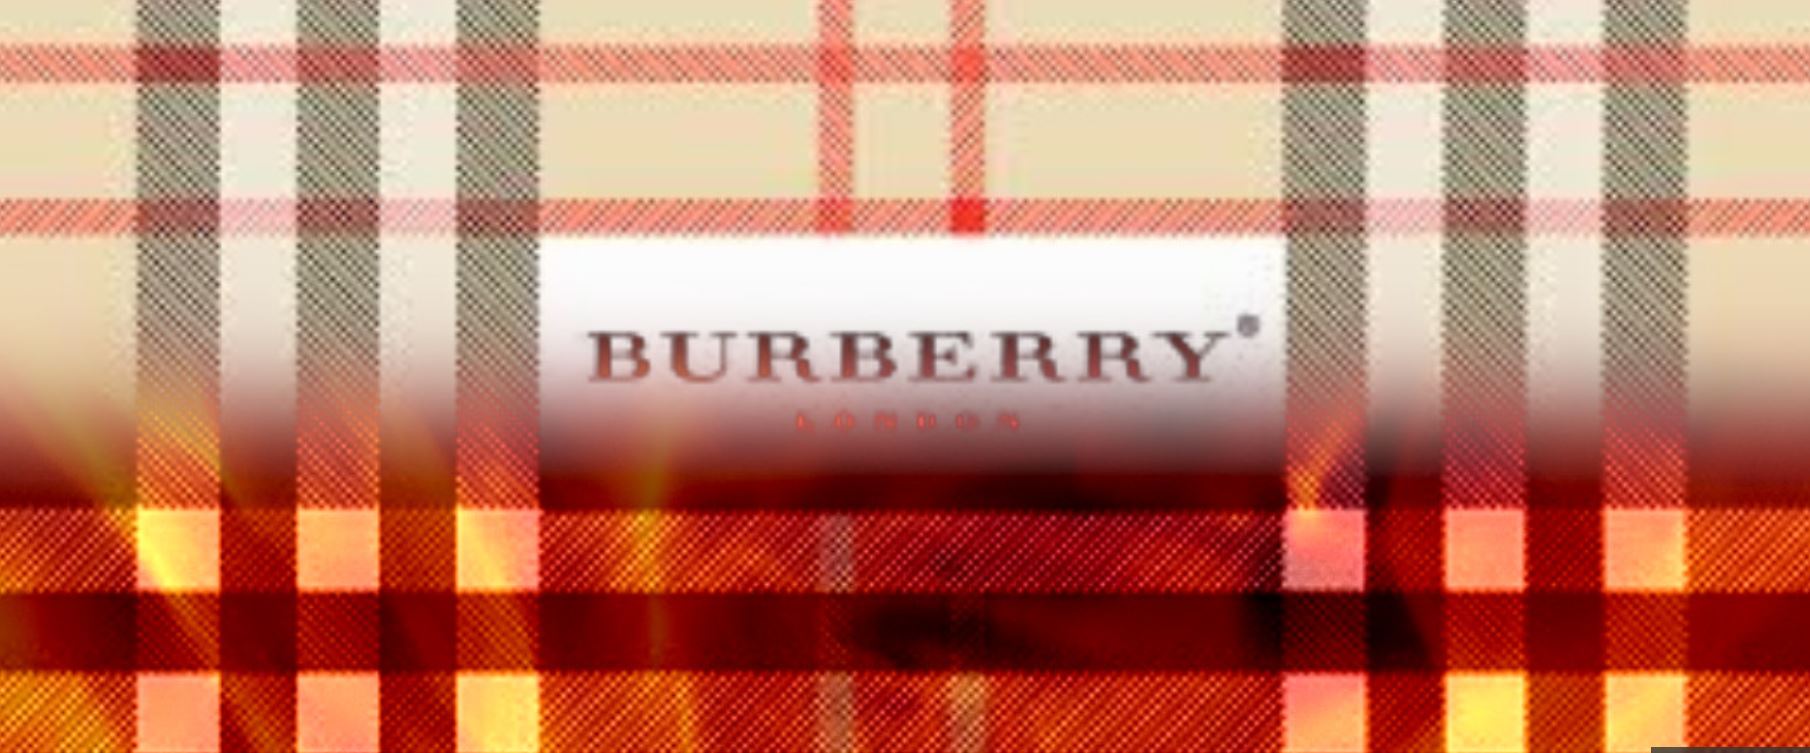 burberry burns clothes